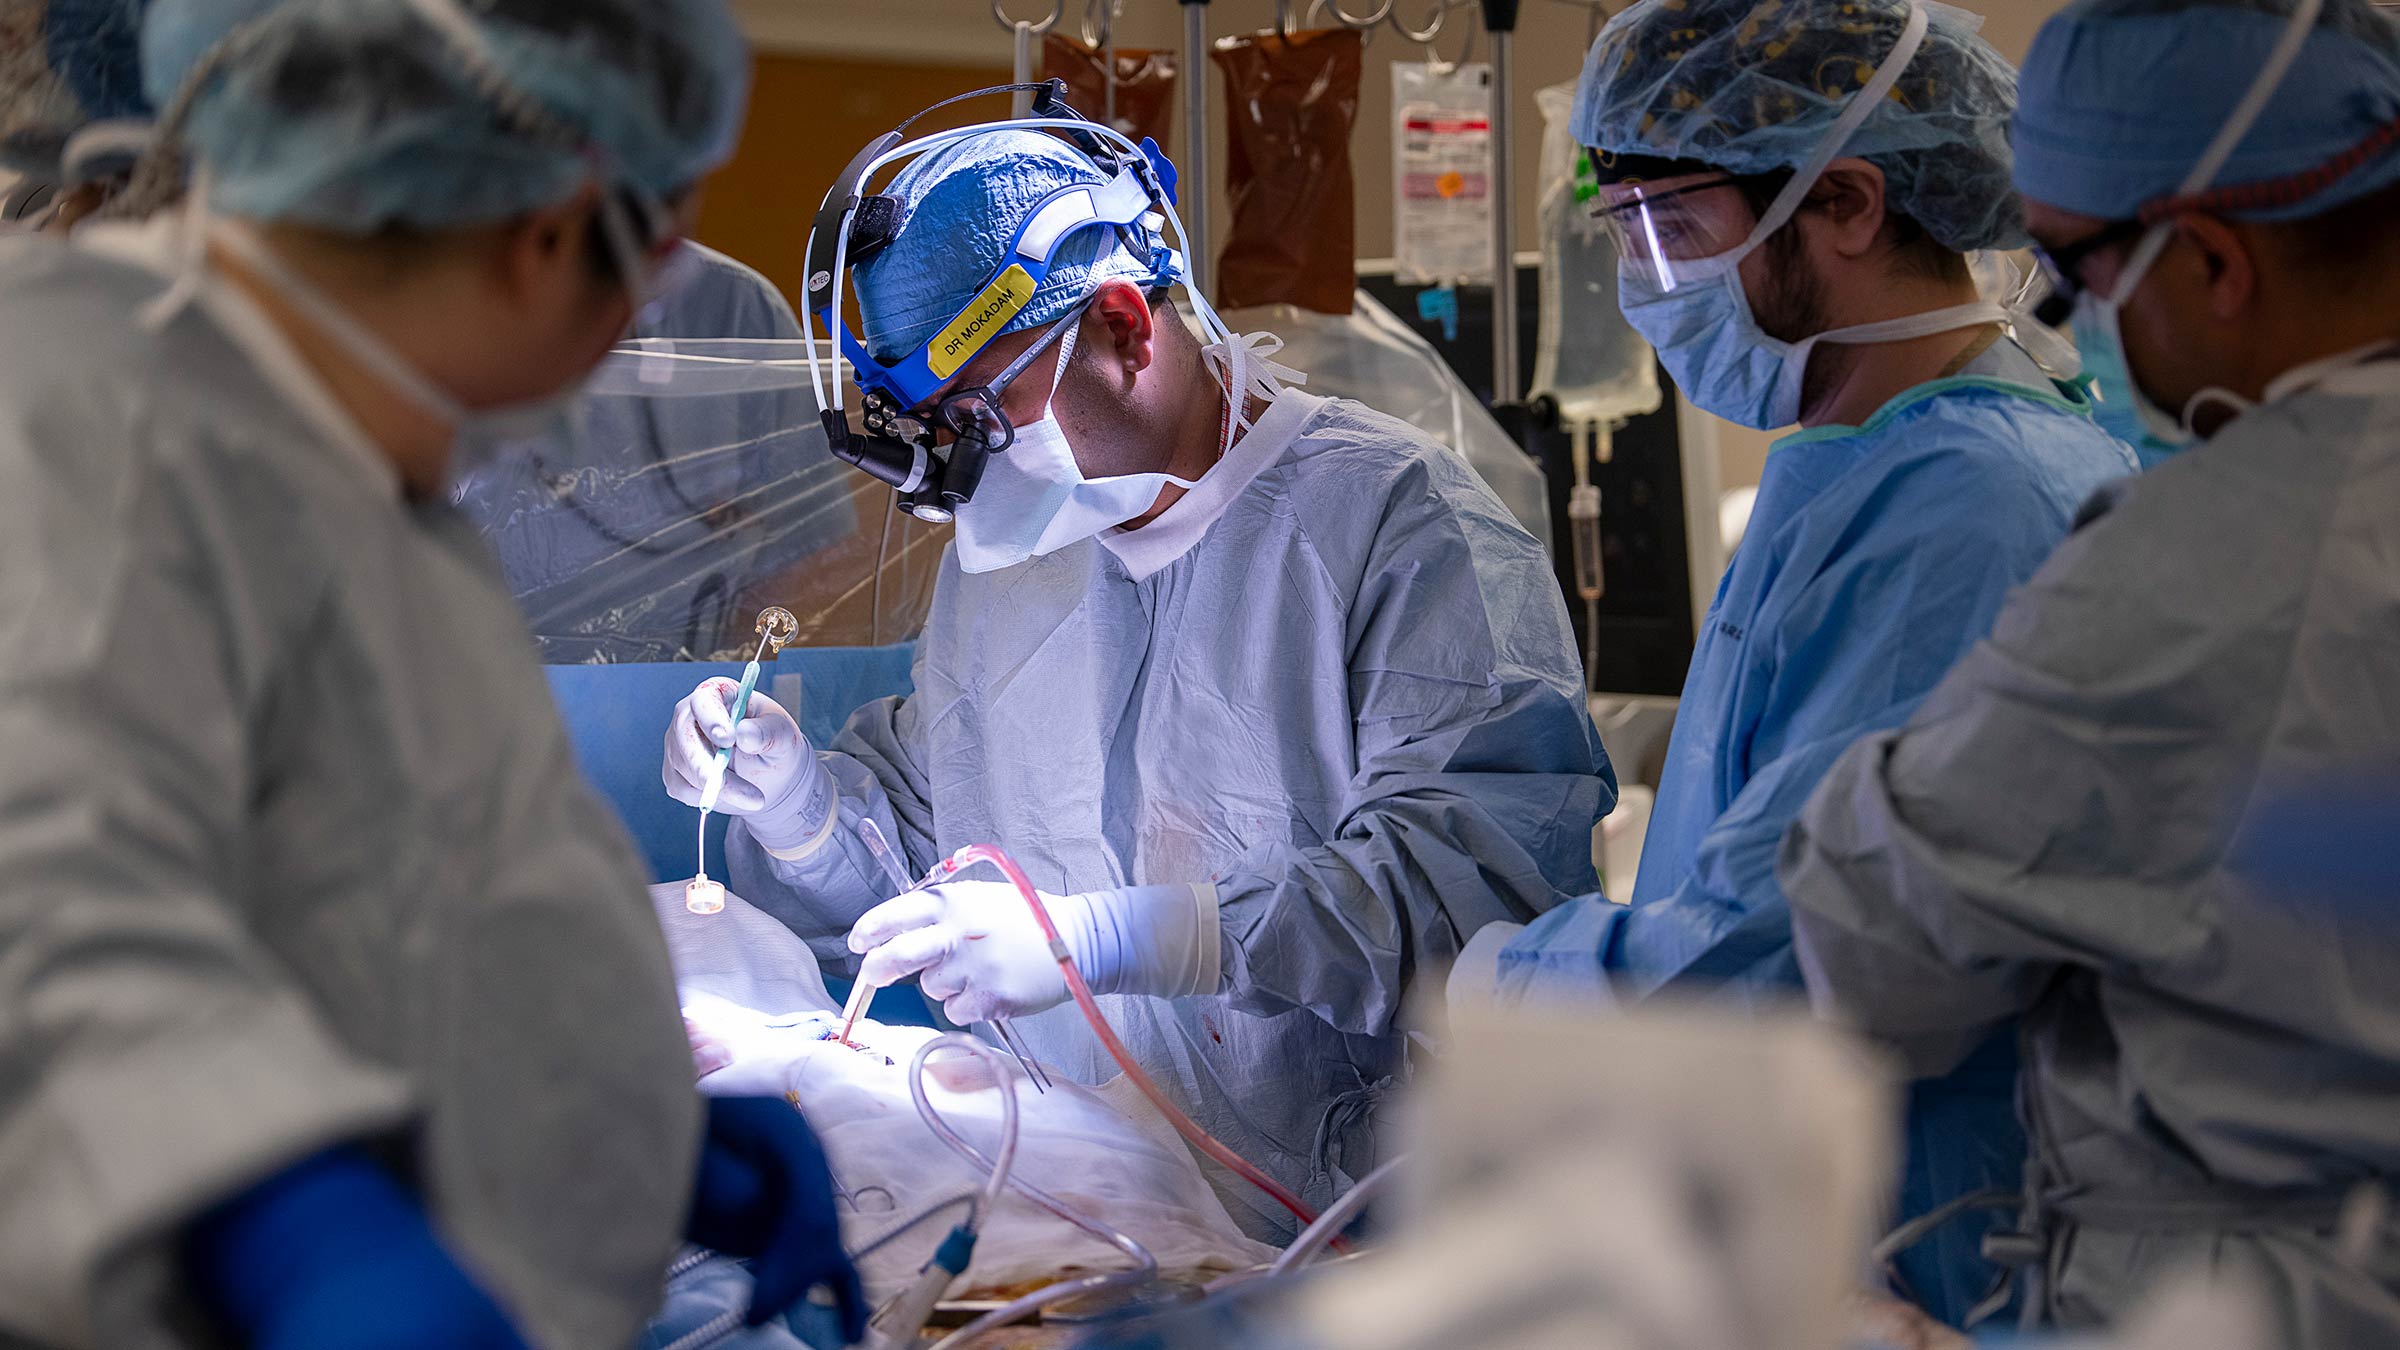 Dr. Mokadam performing a cardiac surgery